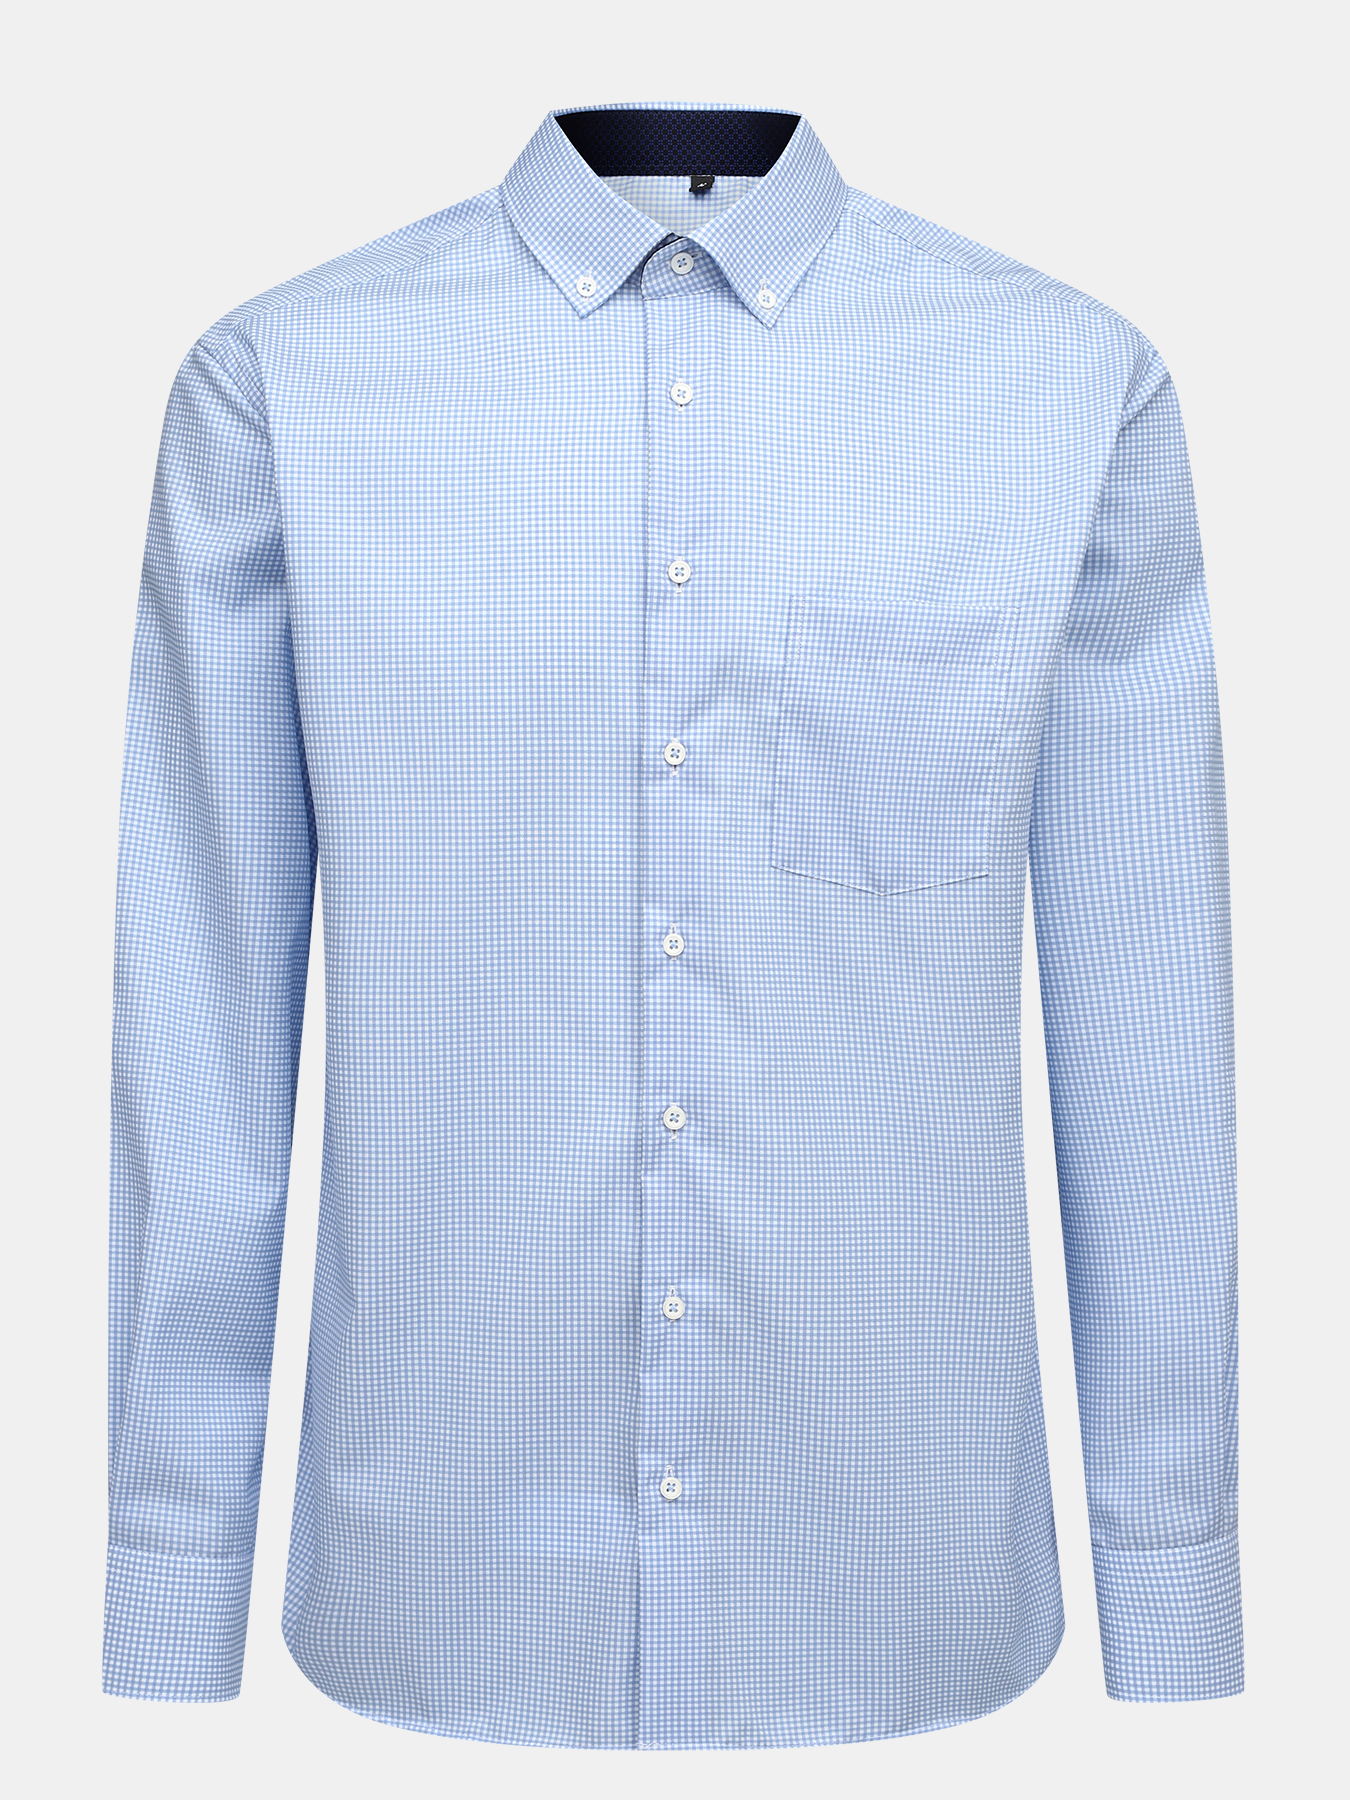 Рубашка Eterna 392364-022, цвет голубой, размер 54 - фото 1